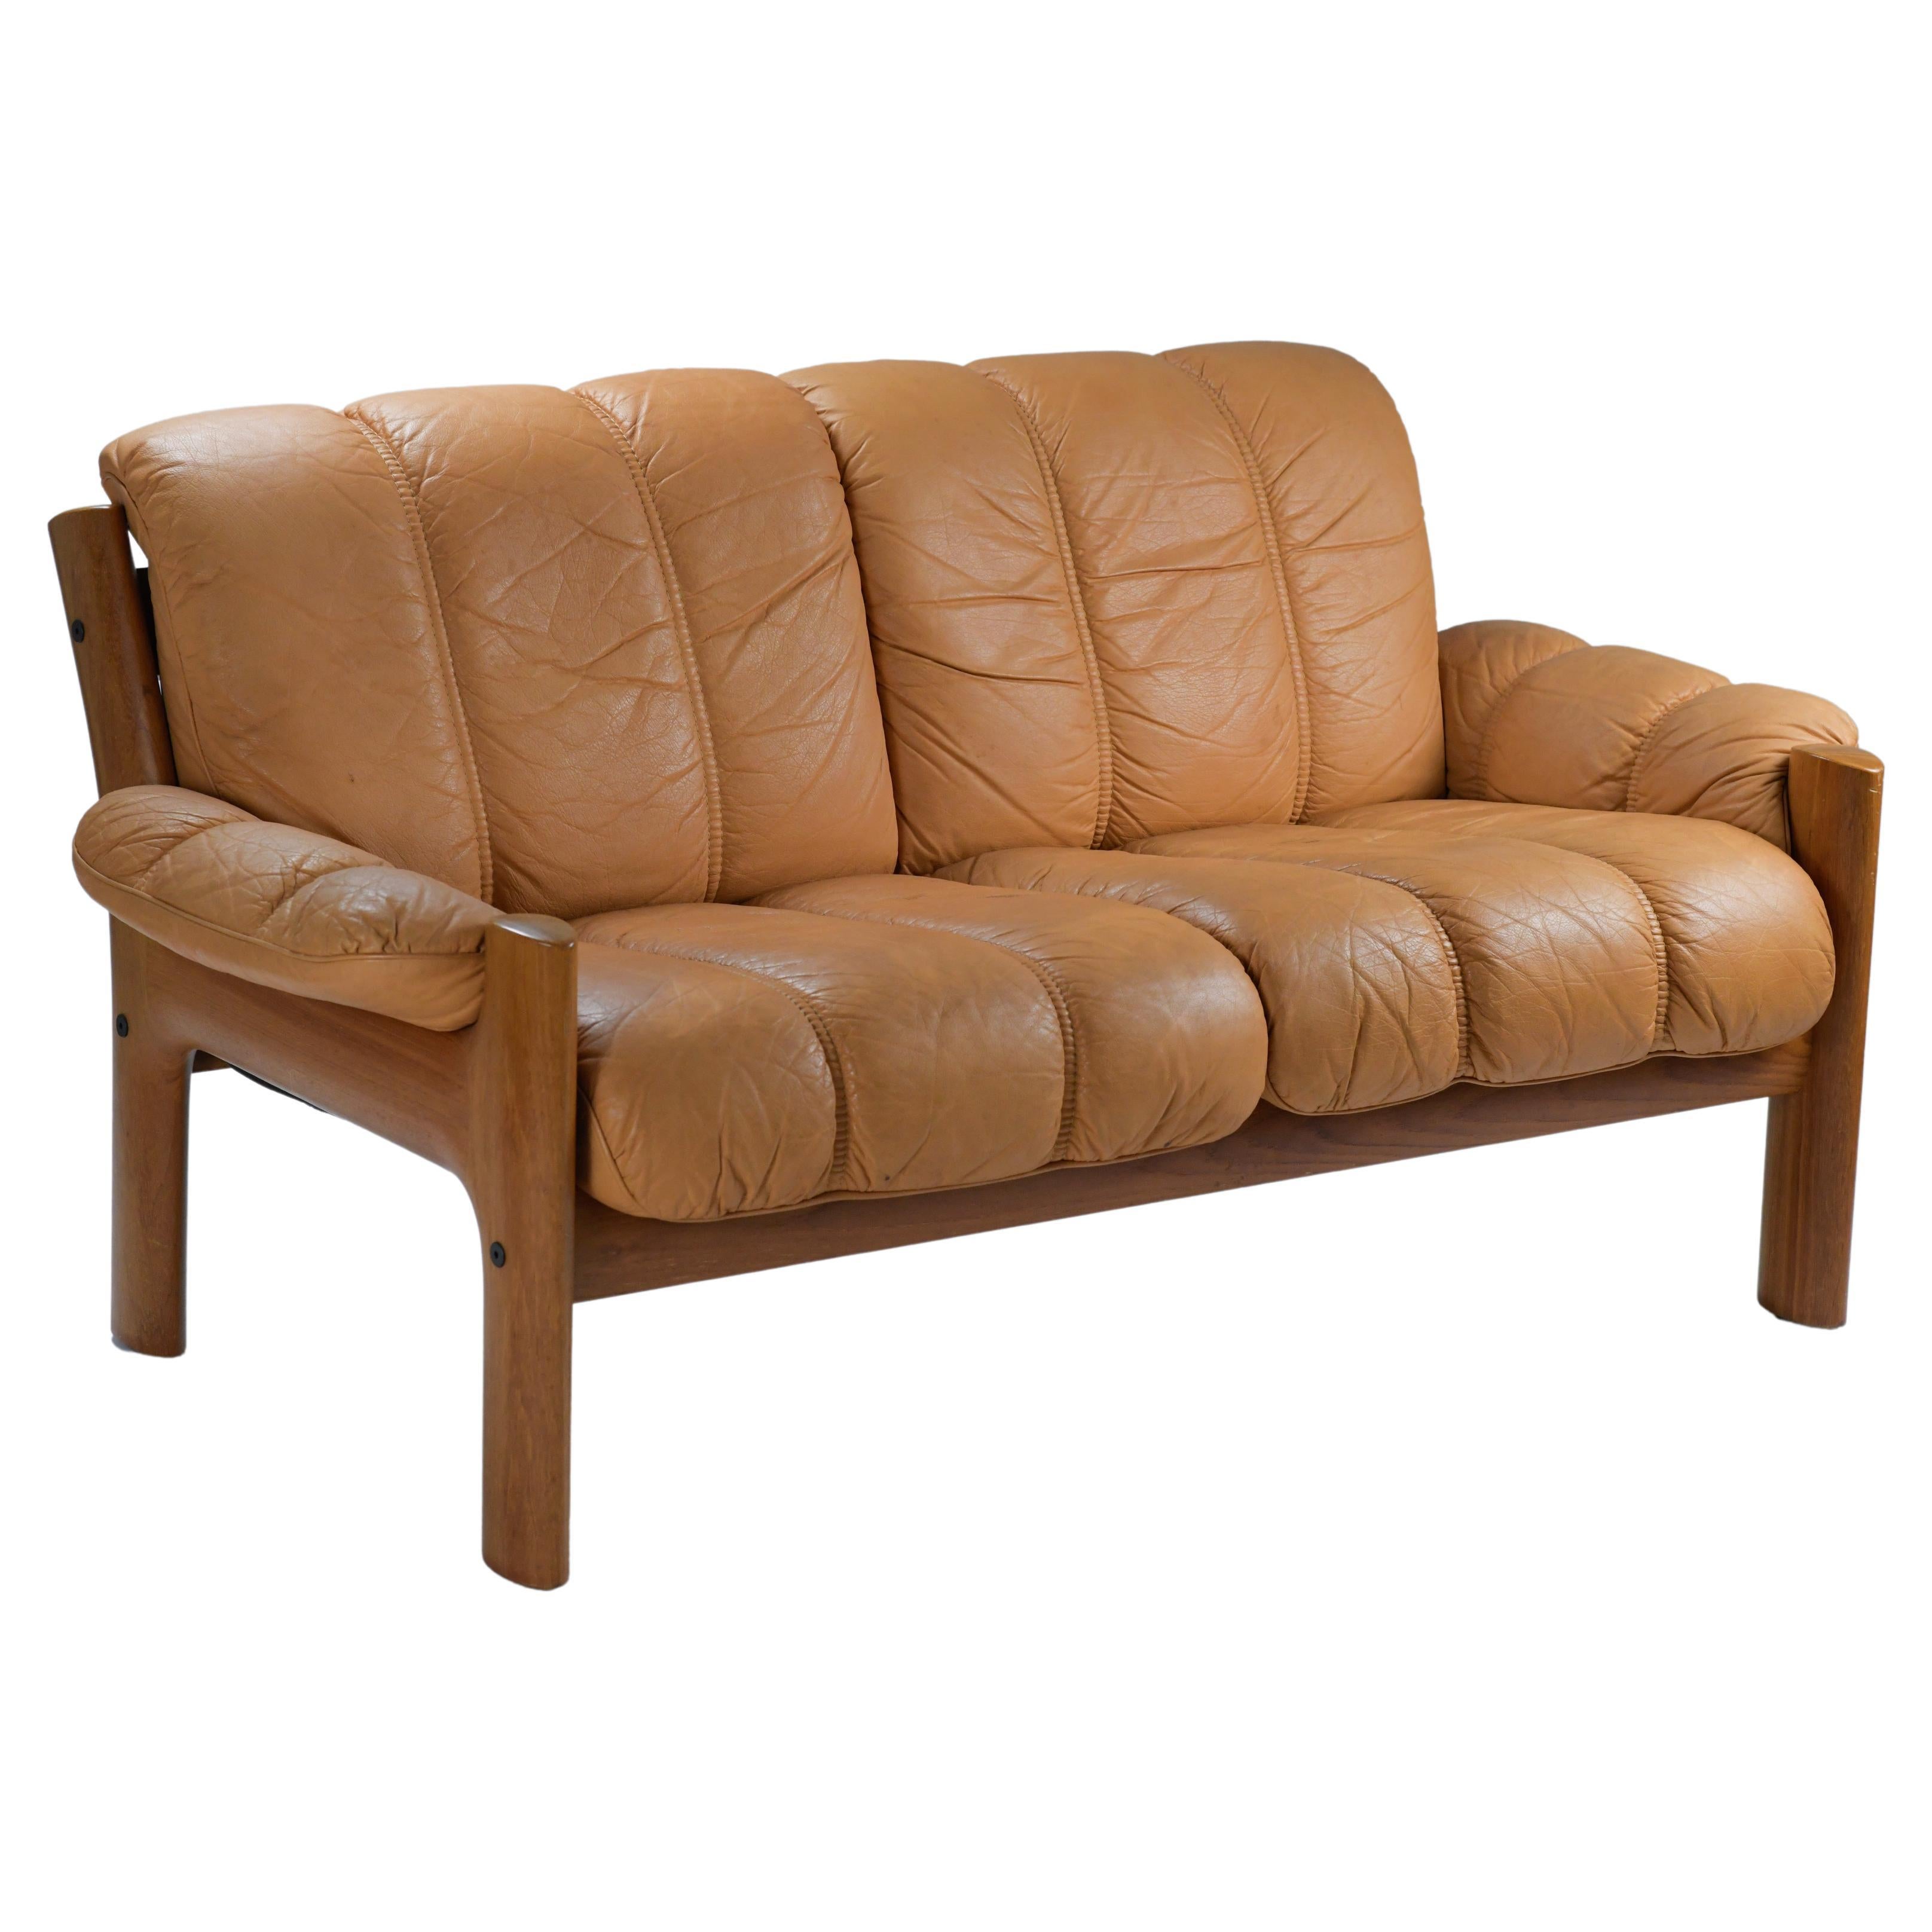 1970s Orange Leather Loveseat Sofa by Ekornes  For Sale